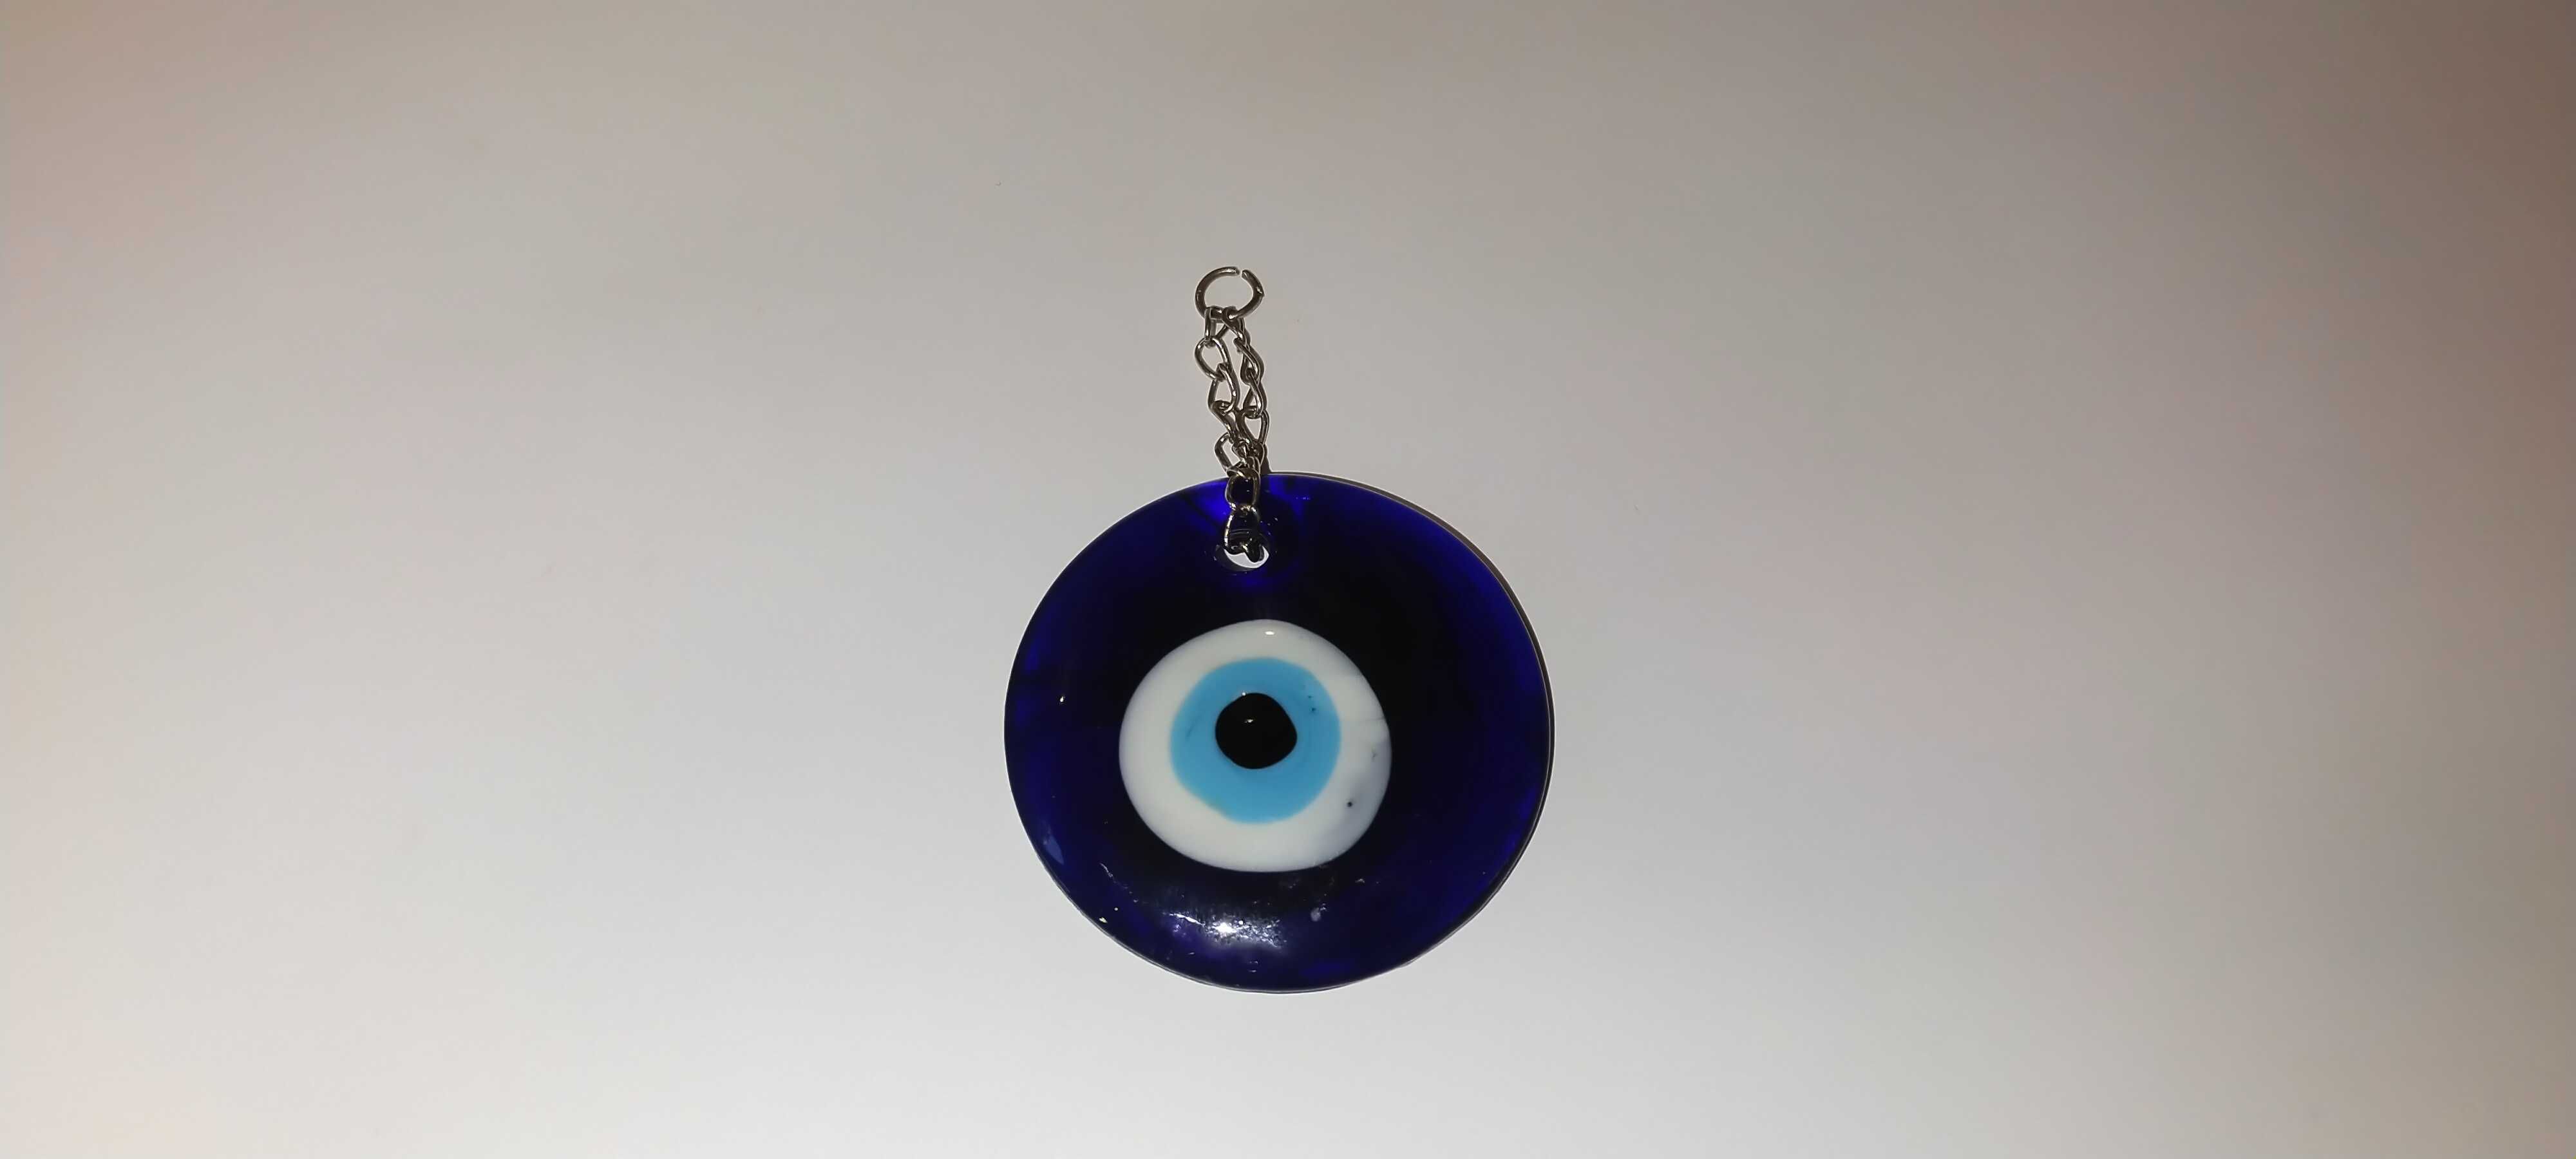 Кулон амулет медальон подвеска "Blue Eye"